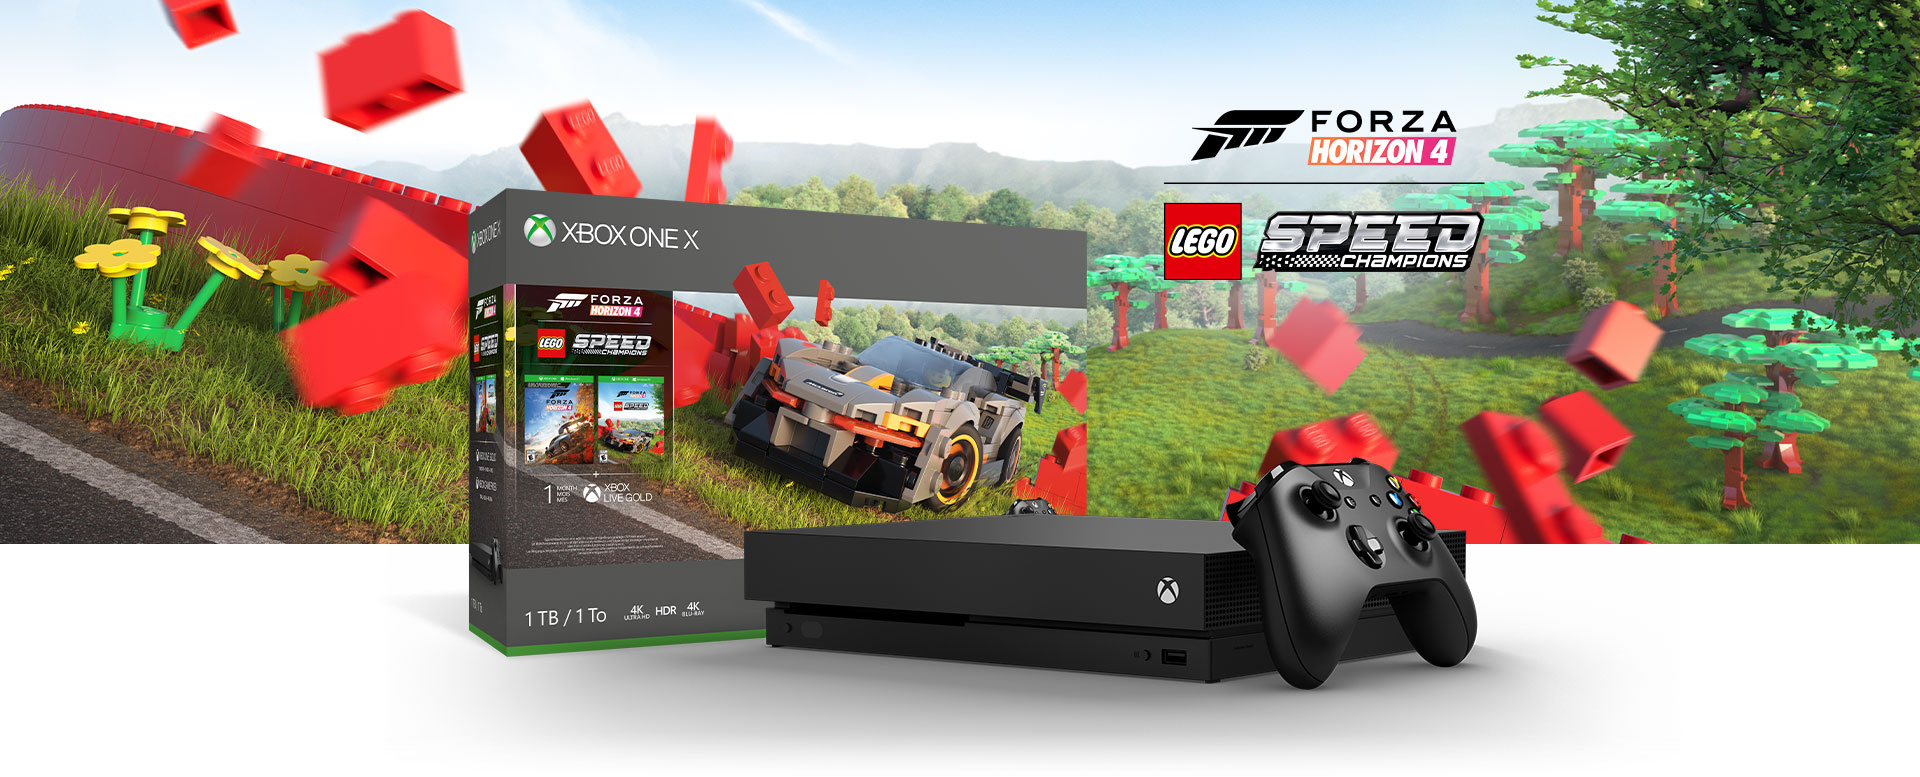 Xbox One X console in front of a hardware bundle box featuring Forza Horizon Lego art; Forza Horizon 4 logo, Lego Speed Champions logo.